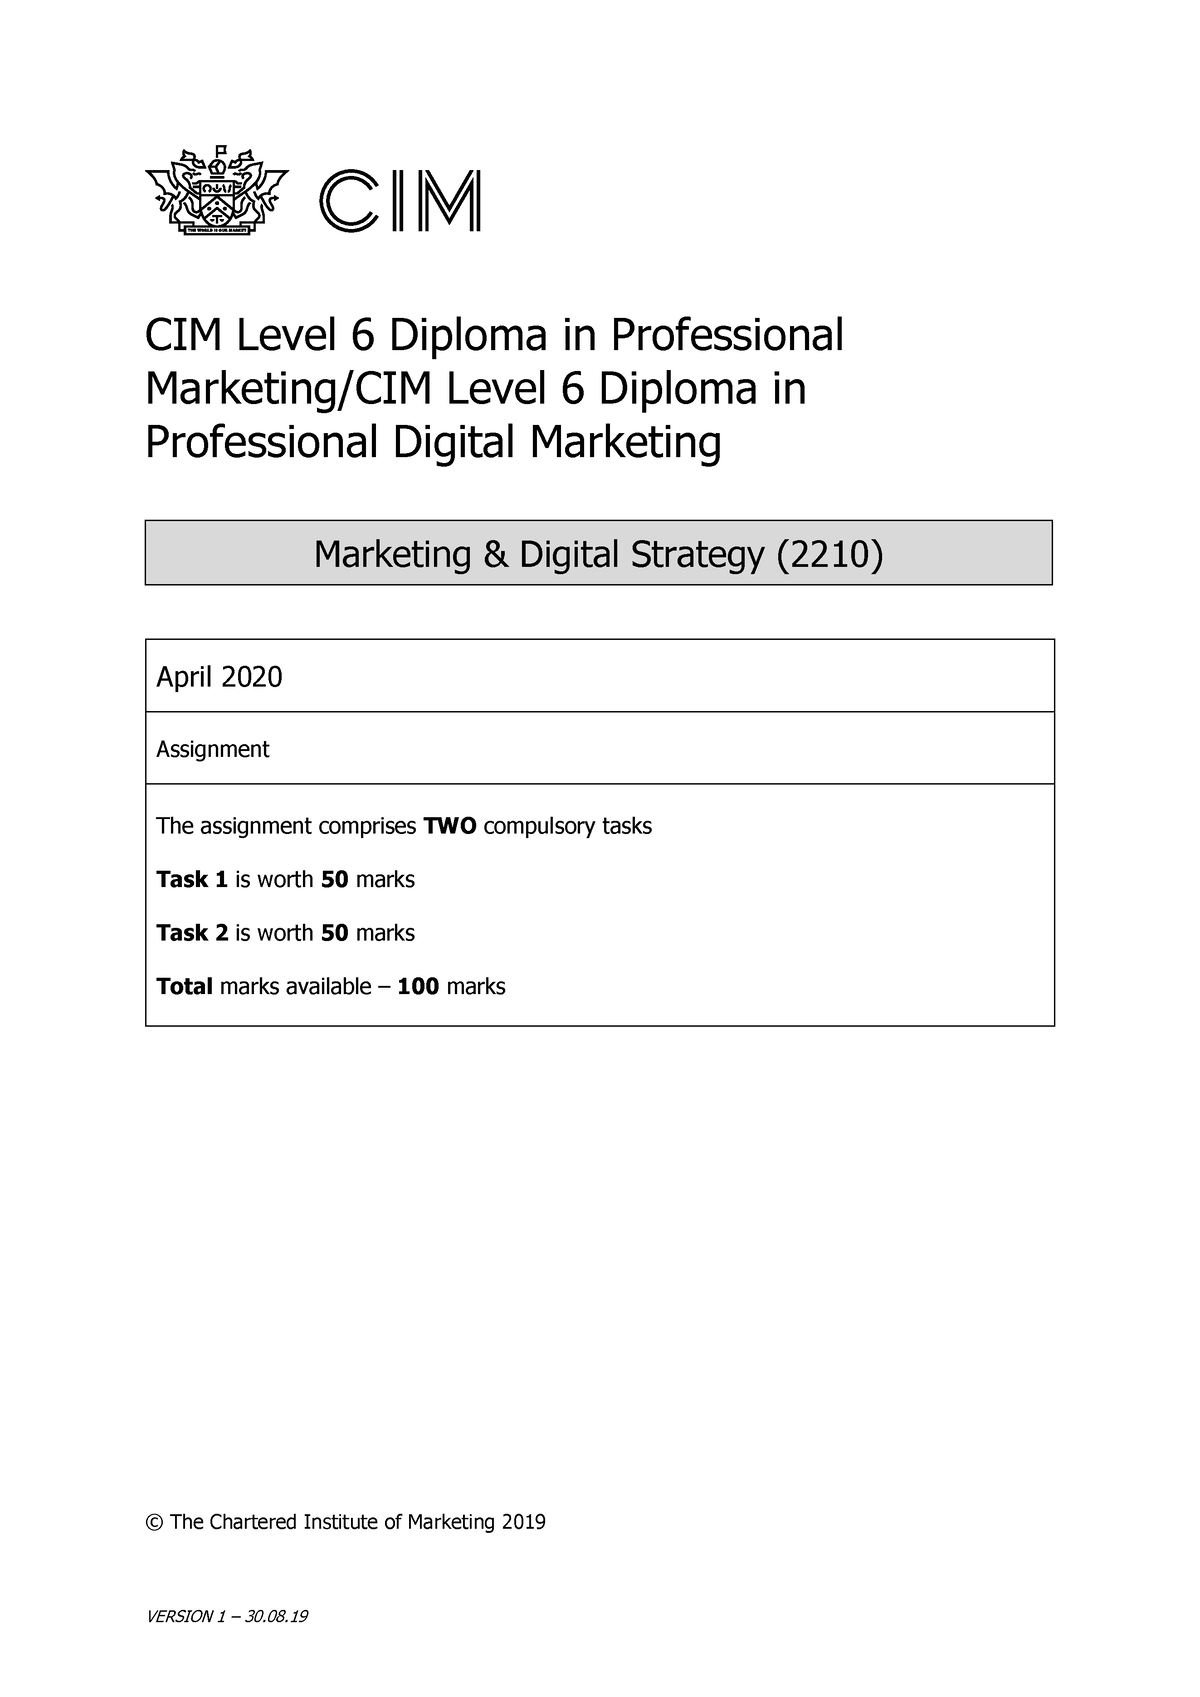 cim digital marketing assignment example